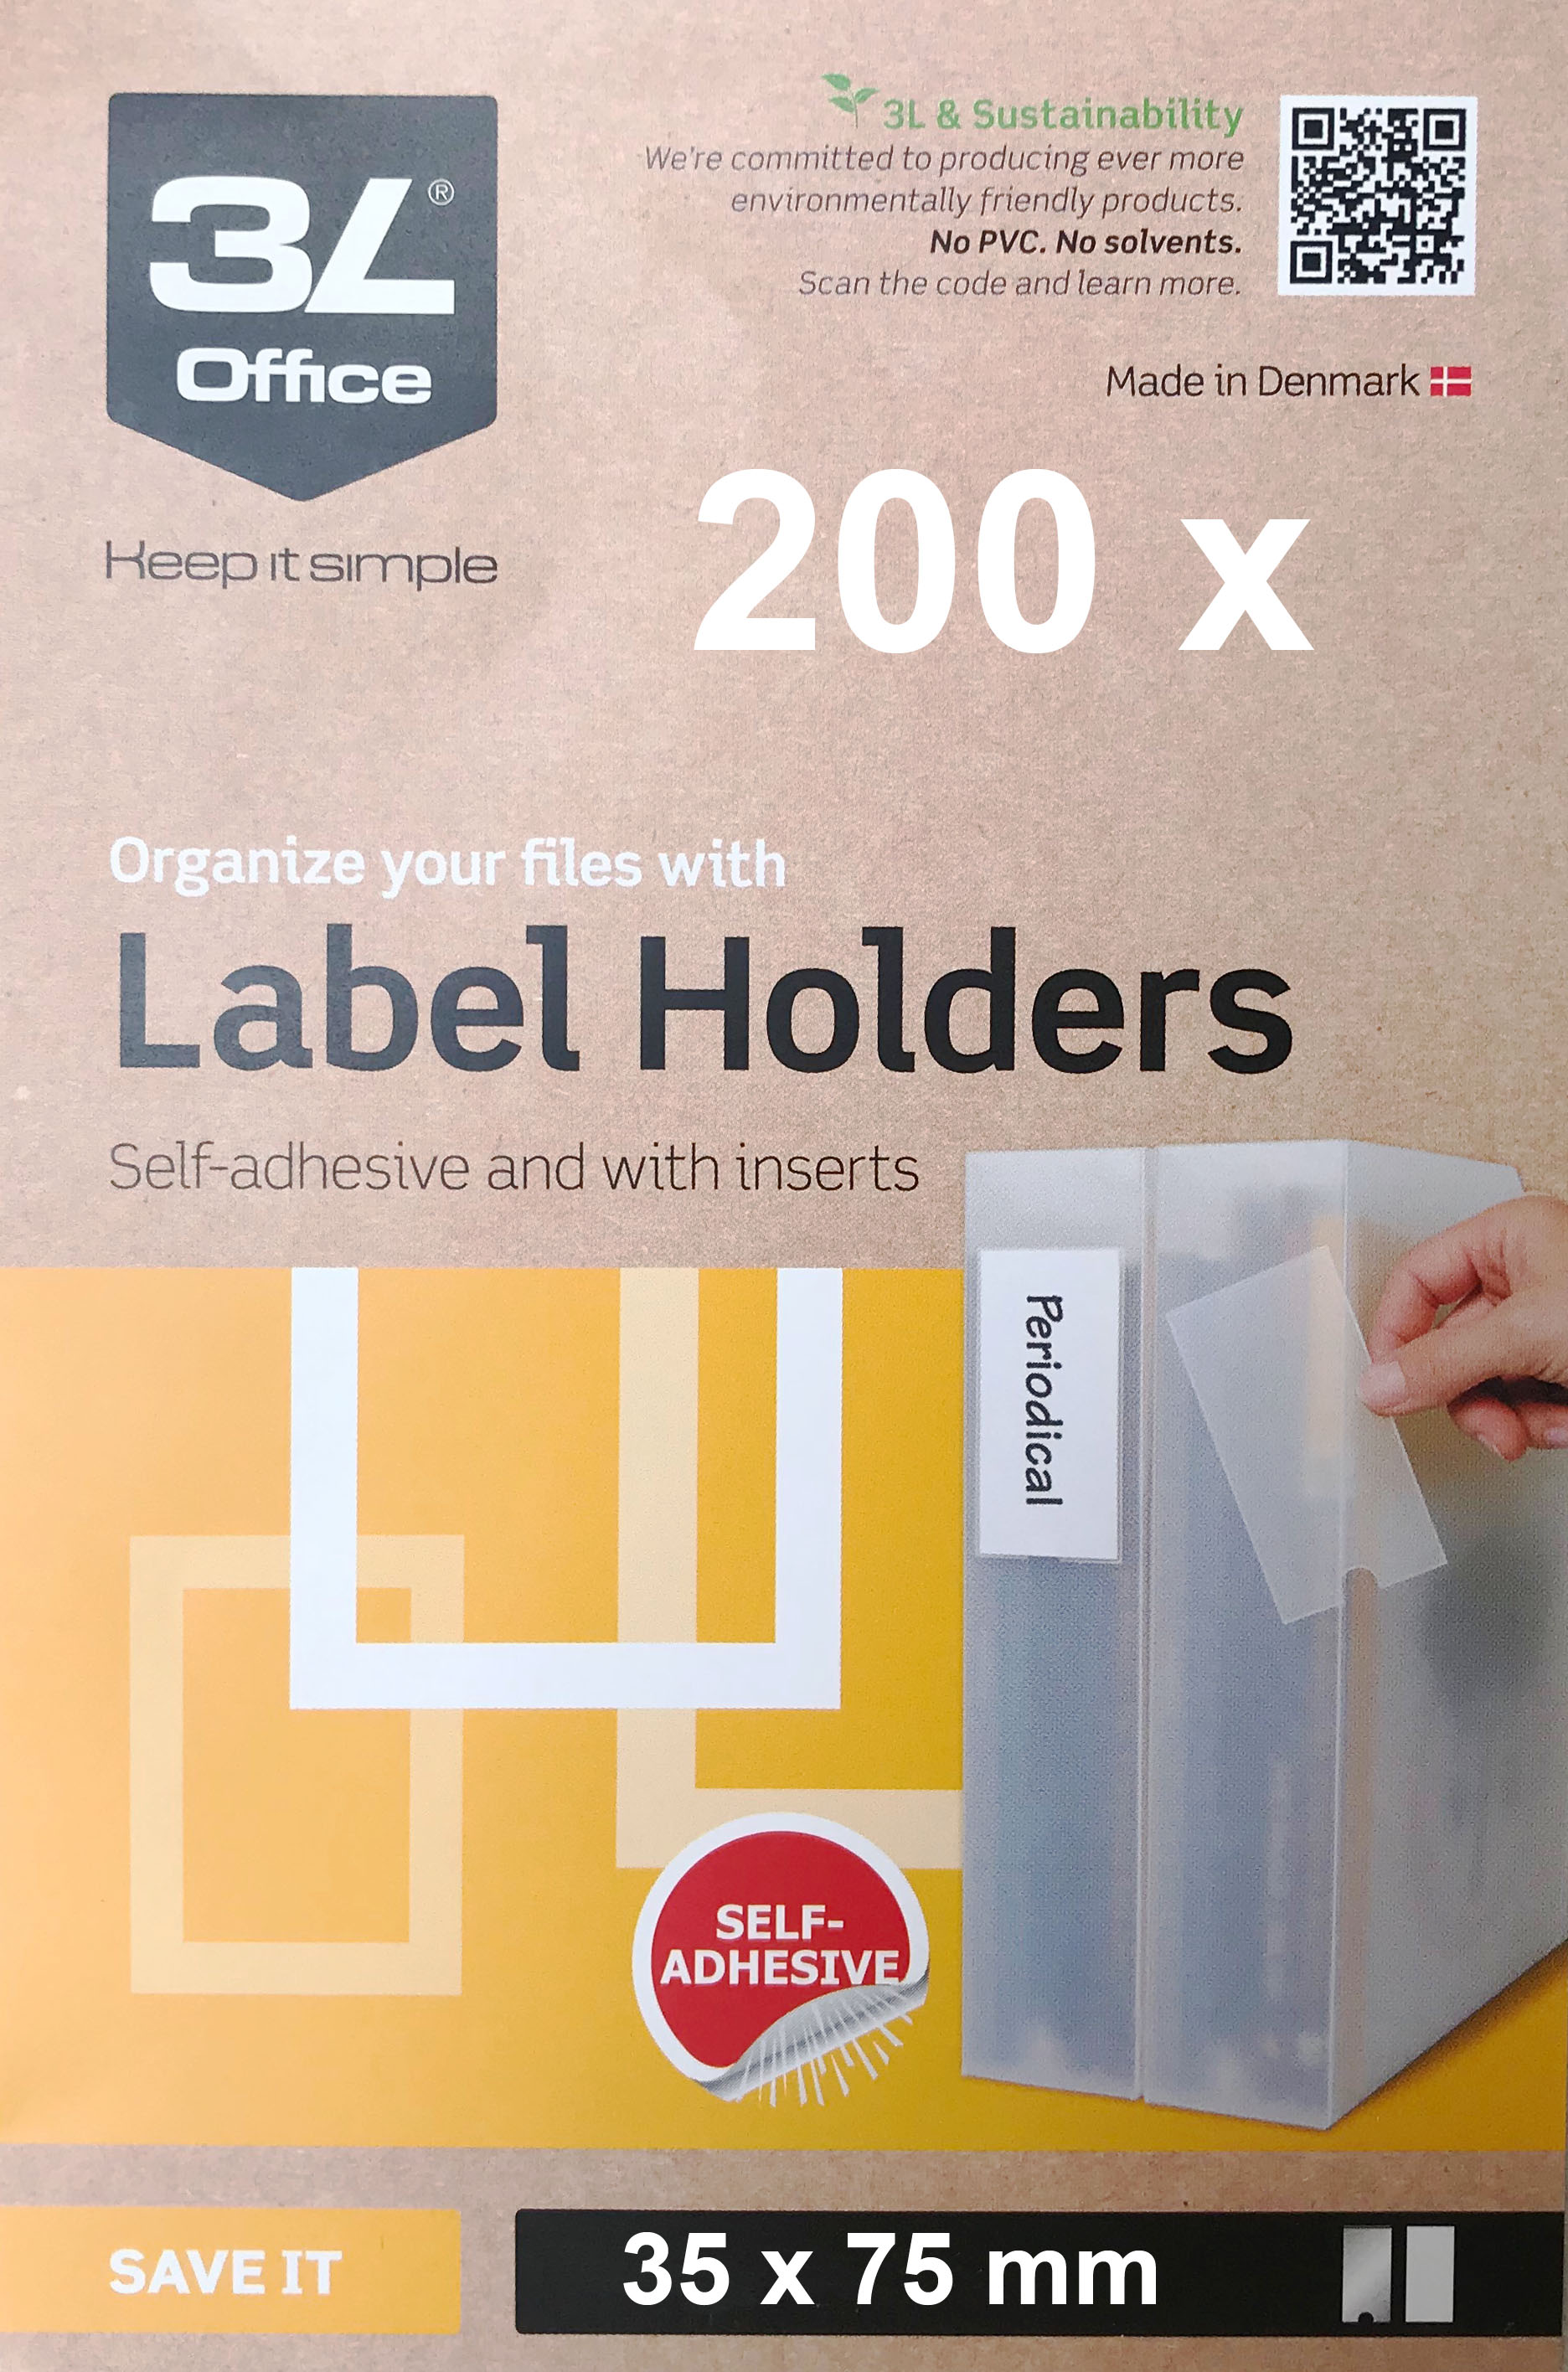 3L Label holders - 35 x 75 mm